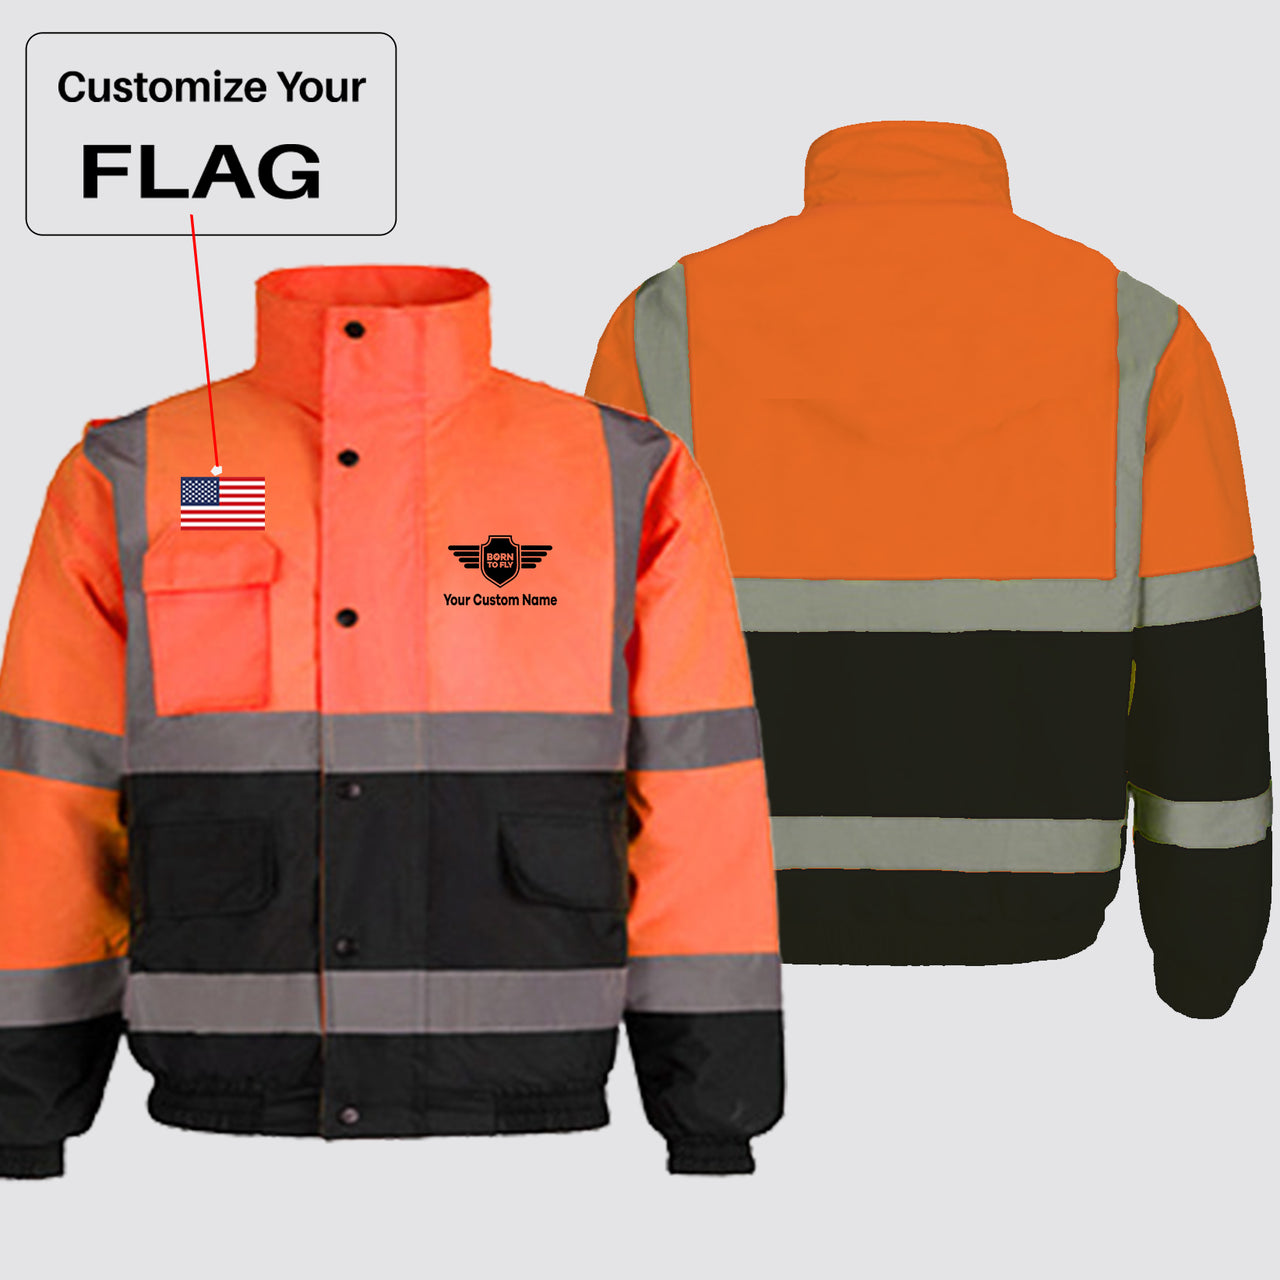 Custom Flag & Name with (Badge 5) Designed Reflective Winter Jackets